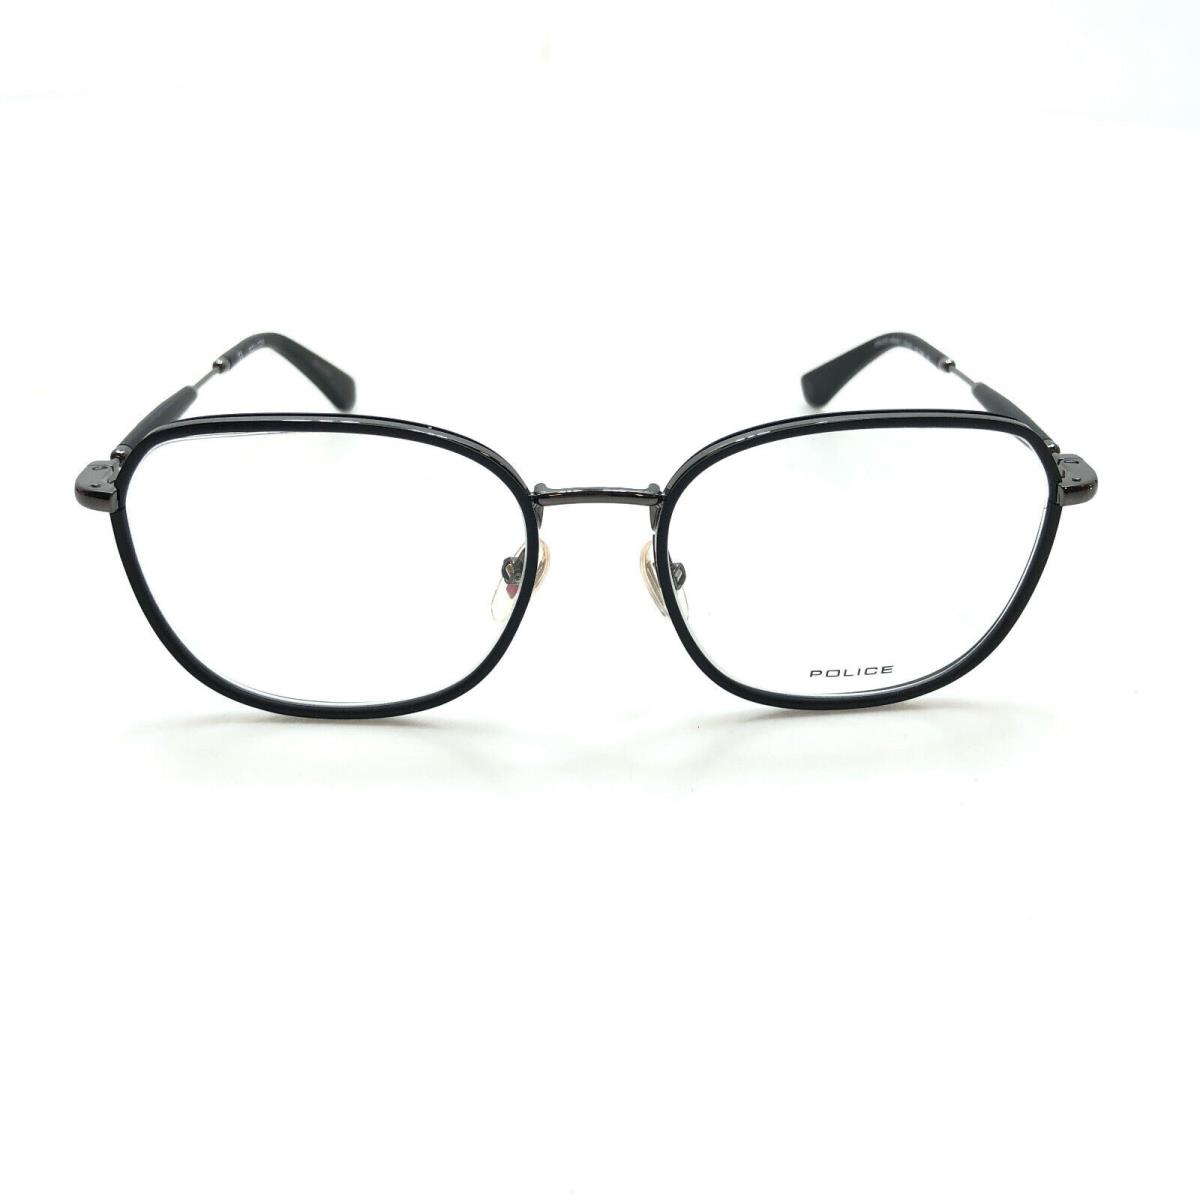 Police eyeglasses  - Black Frame 0